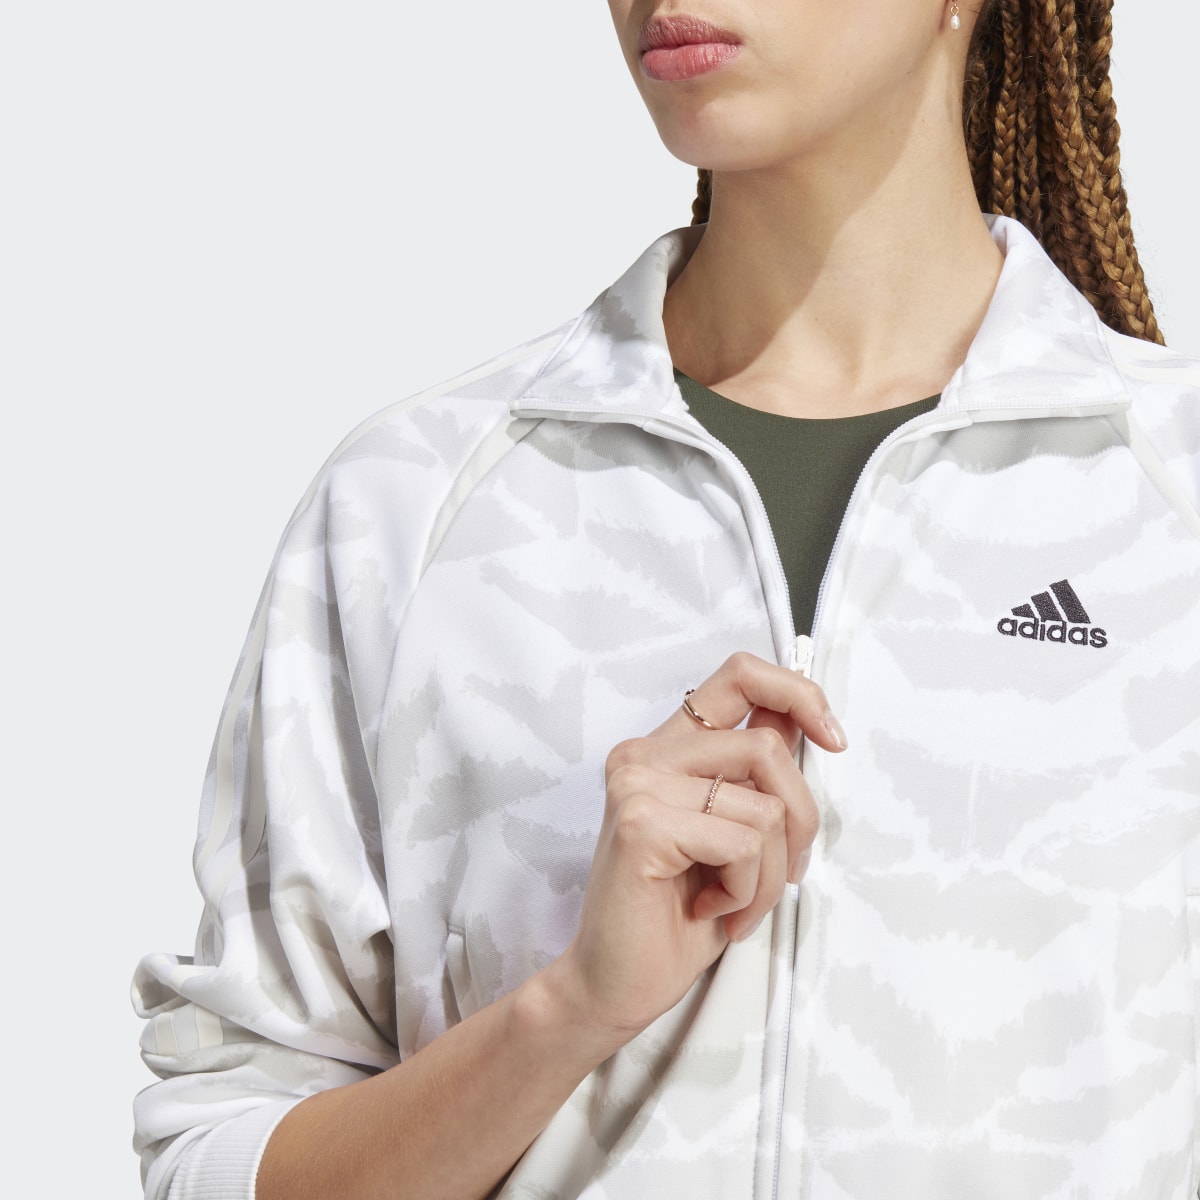 Adidas Tiro Suit Up Lifestyle Trainingsjacke. 6